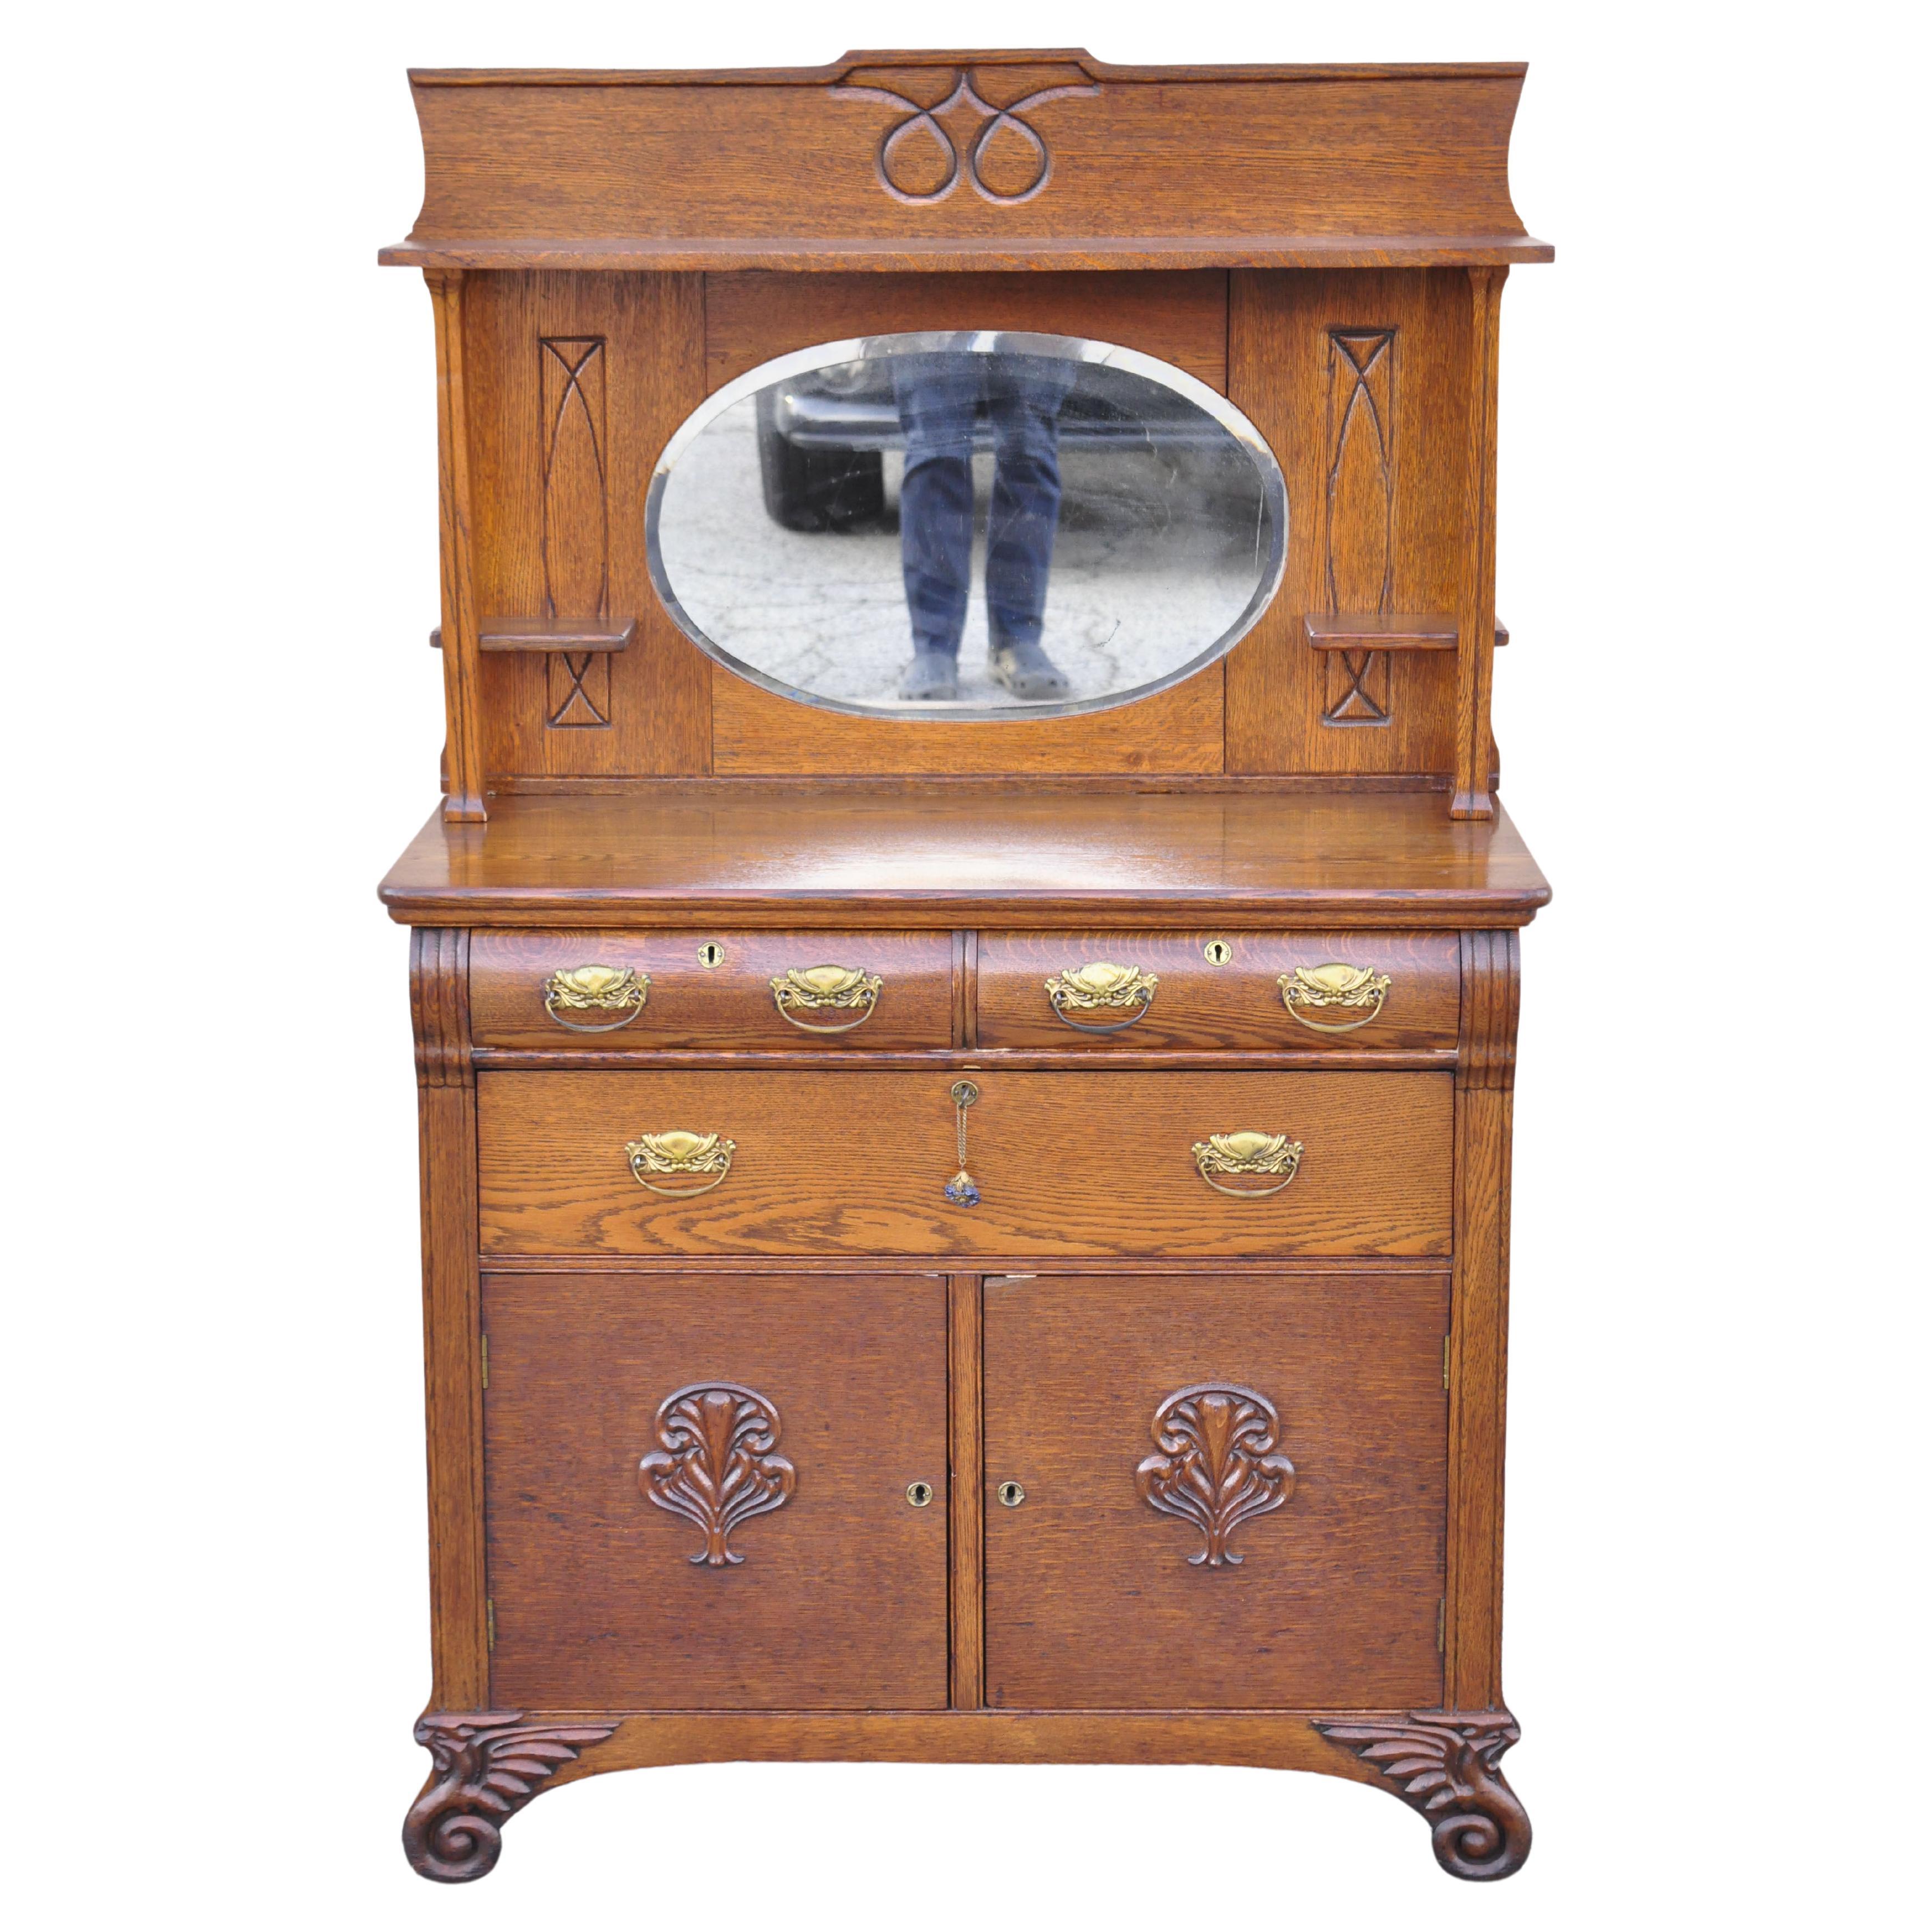 Antique Victorian Oak Wood Sideboard Buffet with Mirror Hutch Backsplash Shelf For Sale